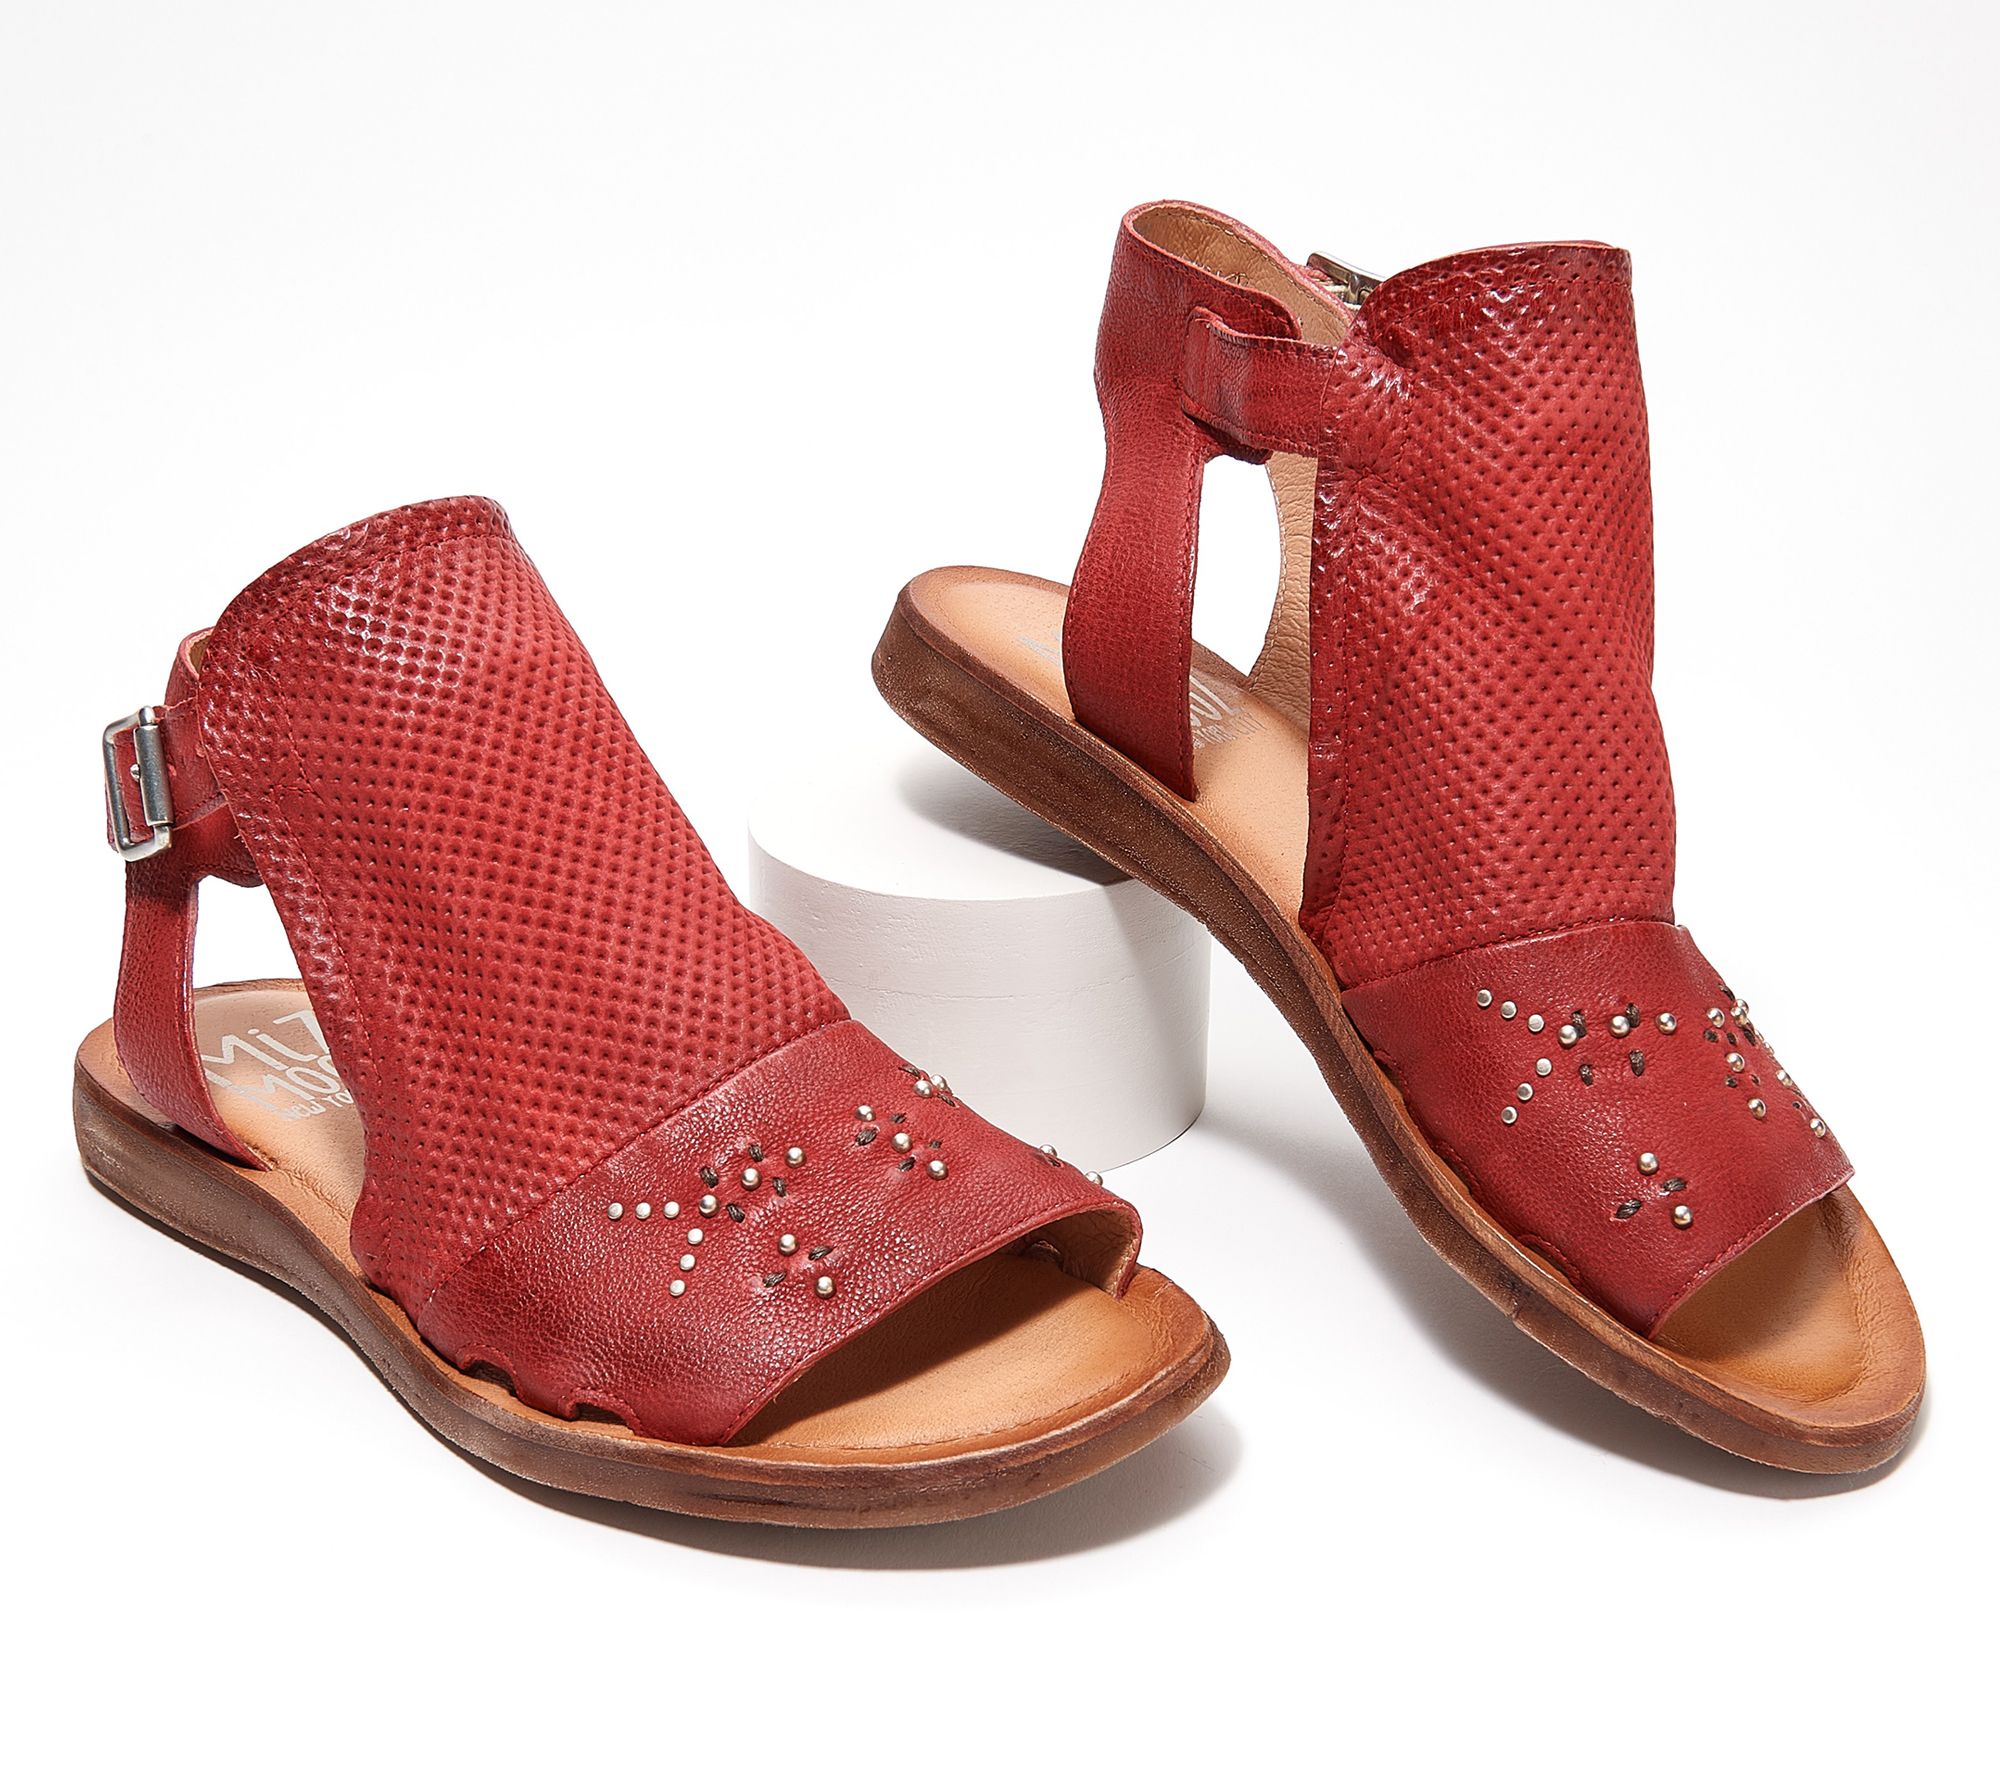 Miz Mooz Leather Ankle-Strap Sandals - Fifi - QVC.com